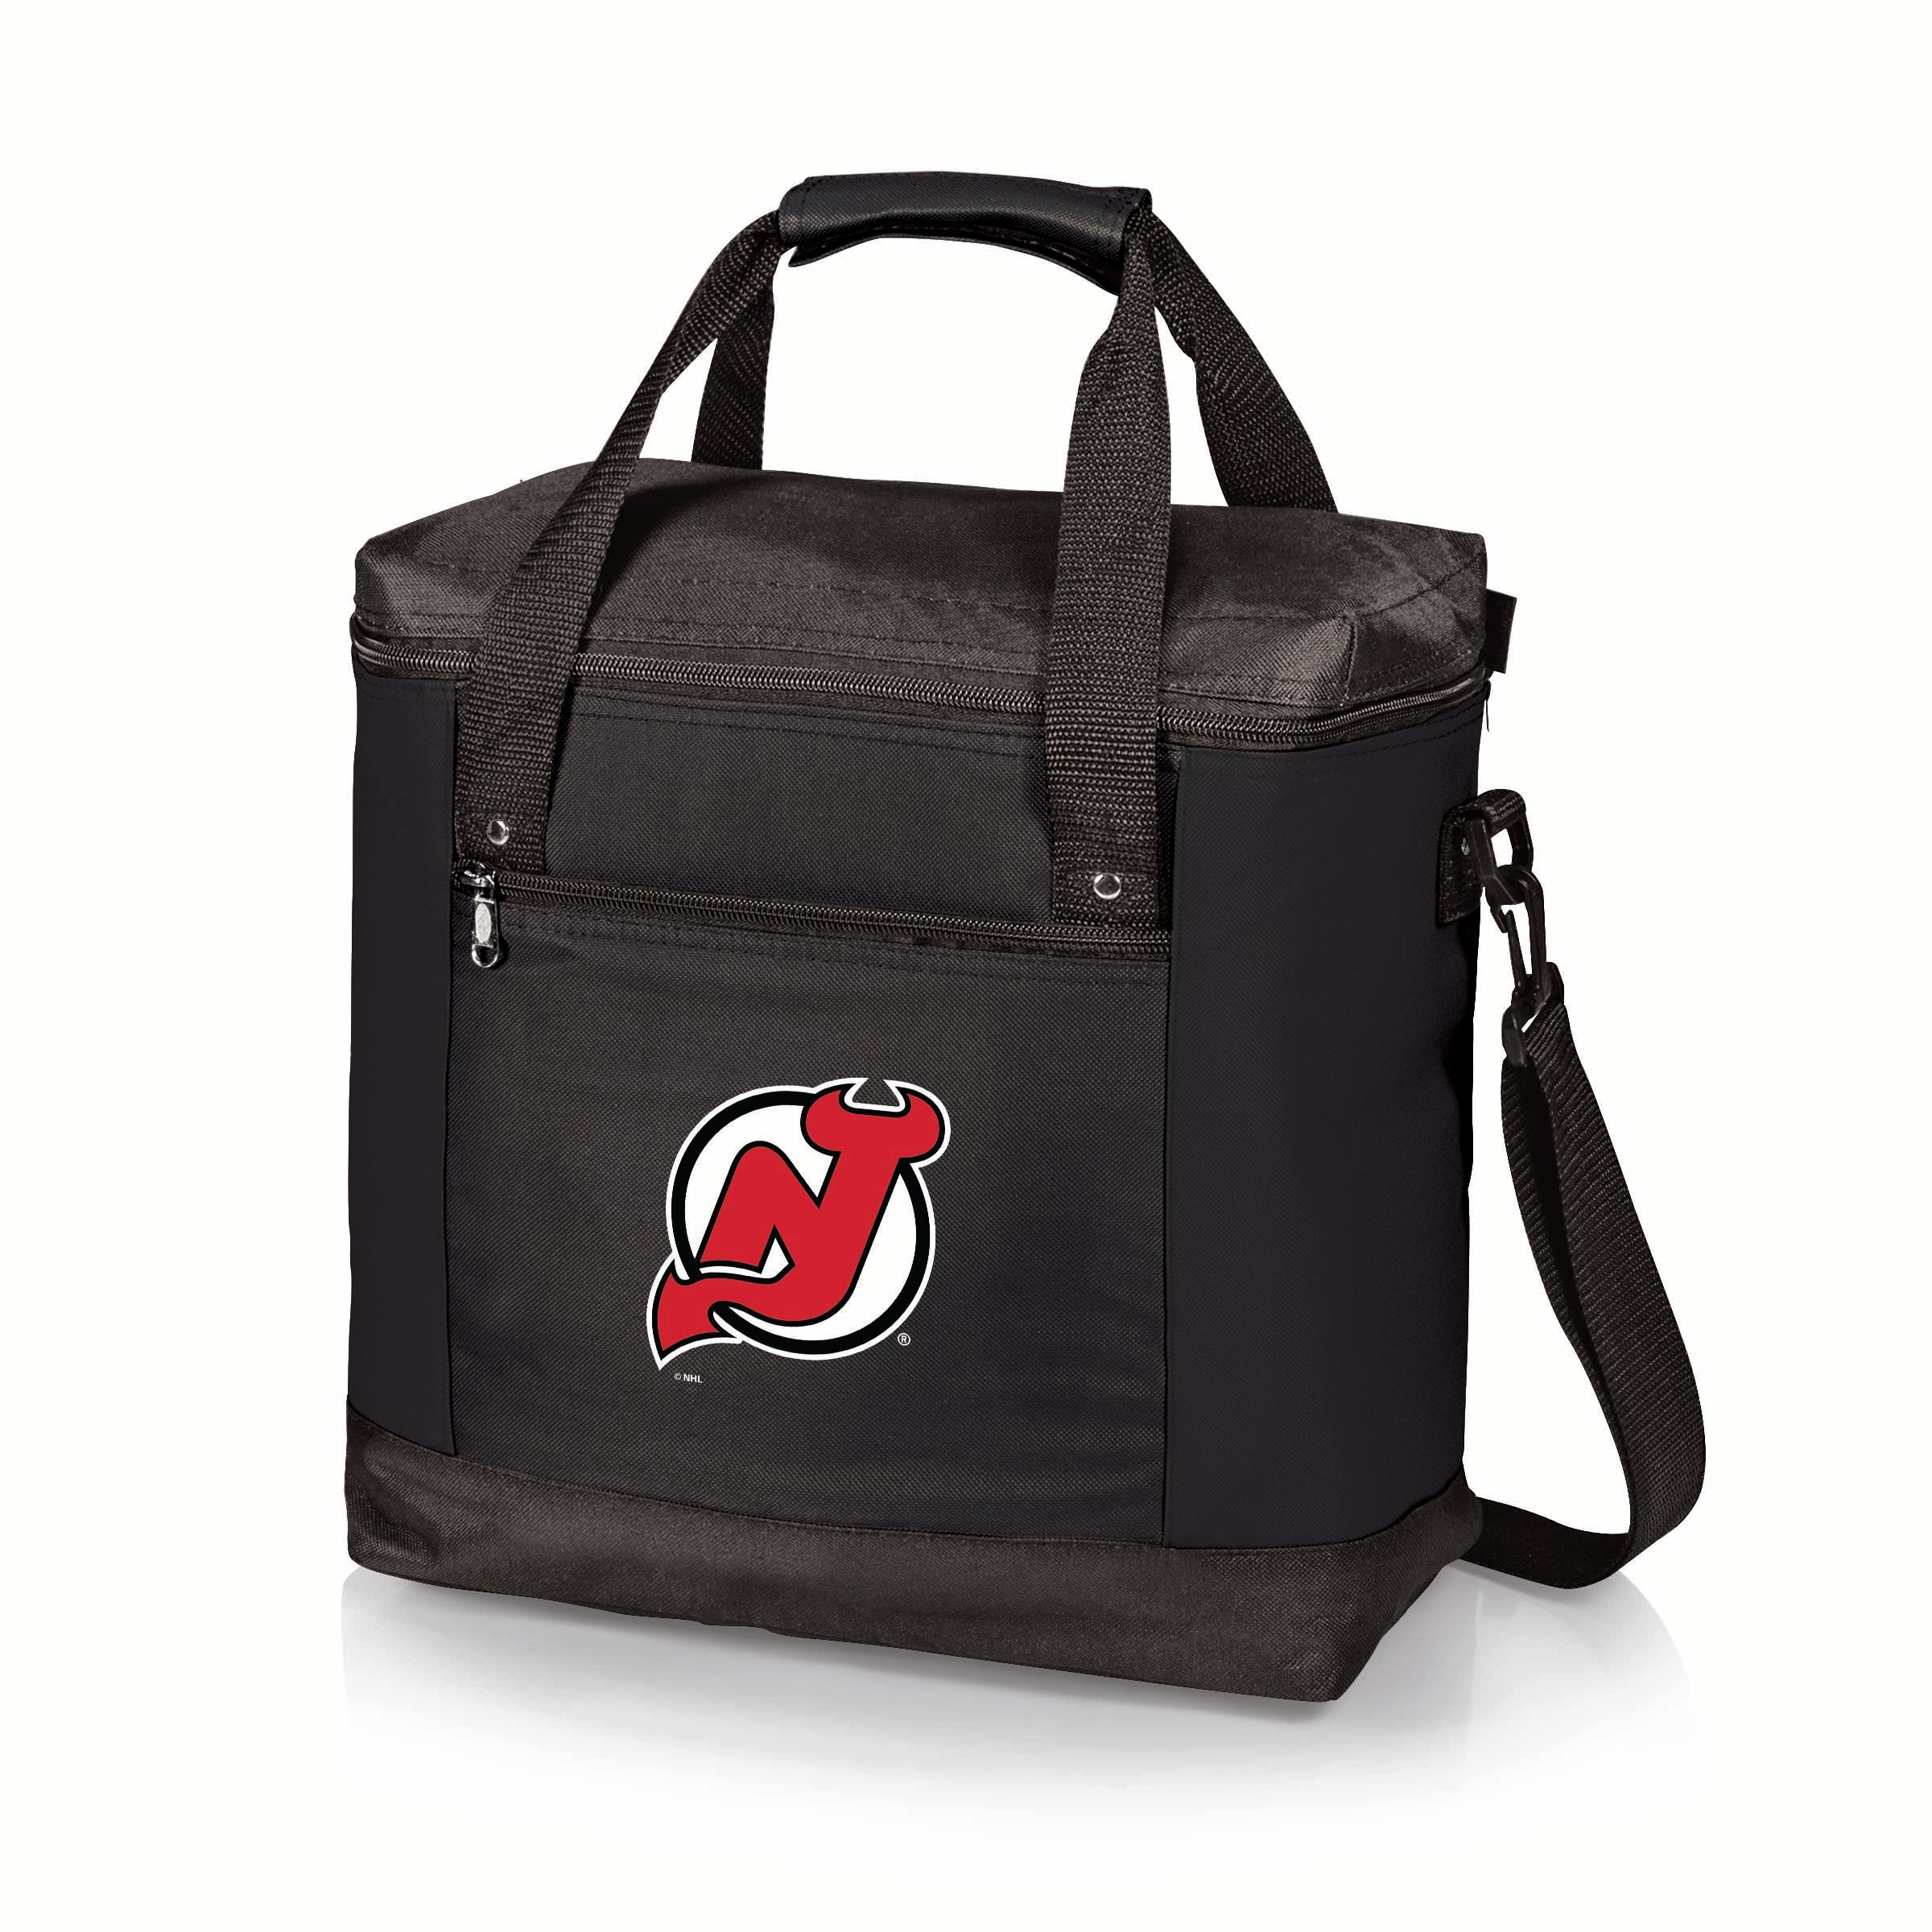 New Jersey Devils - Montero Cooler Tote Bag